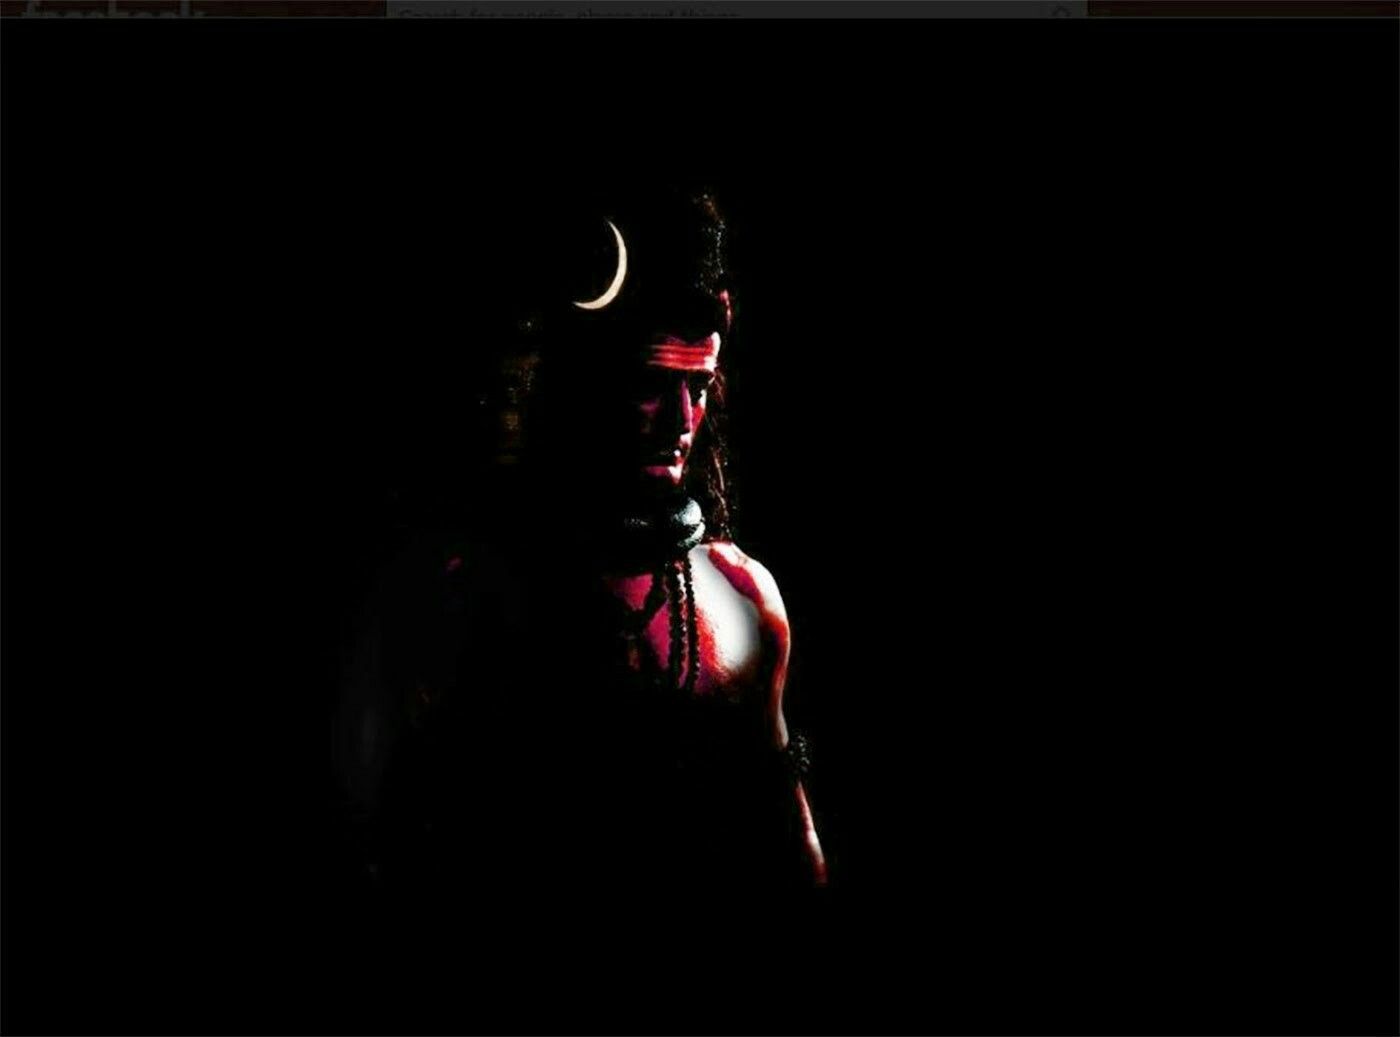 4K Lord Shiva Wallpaper Free 4K Lord Shiva Background